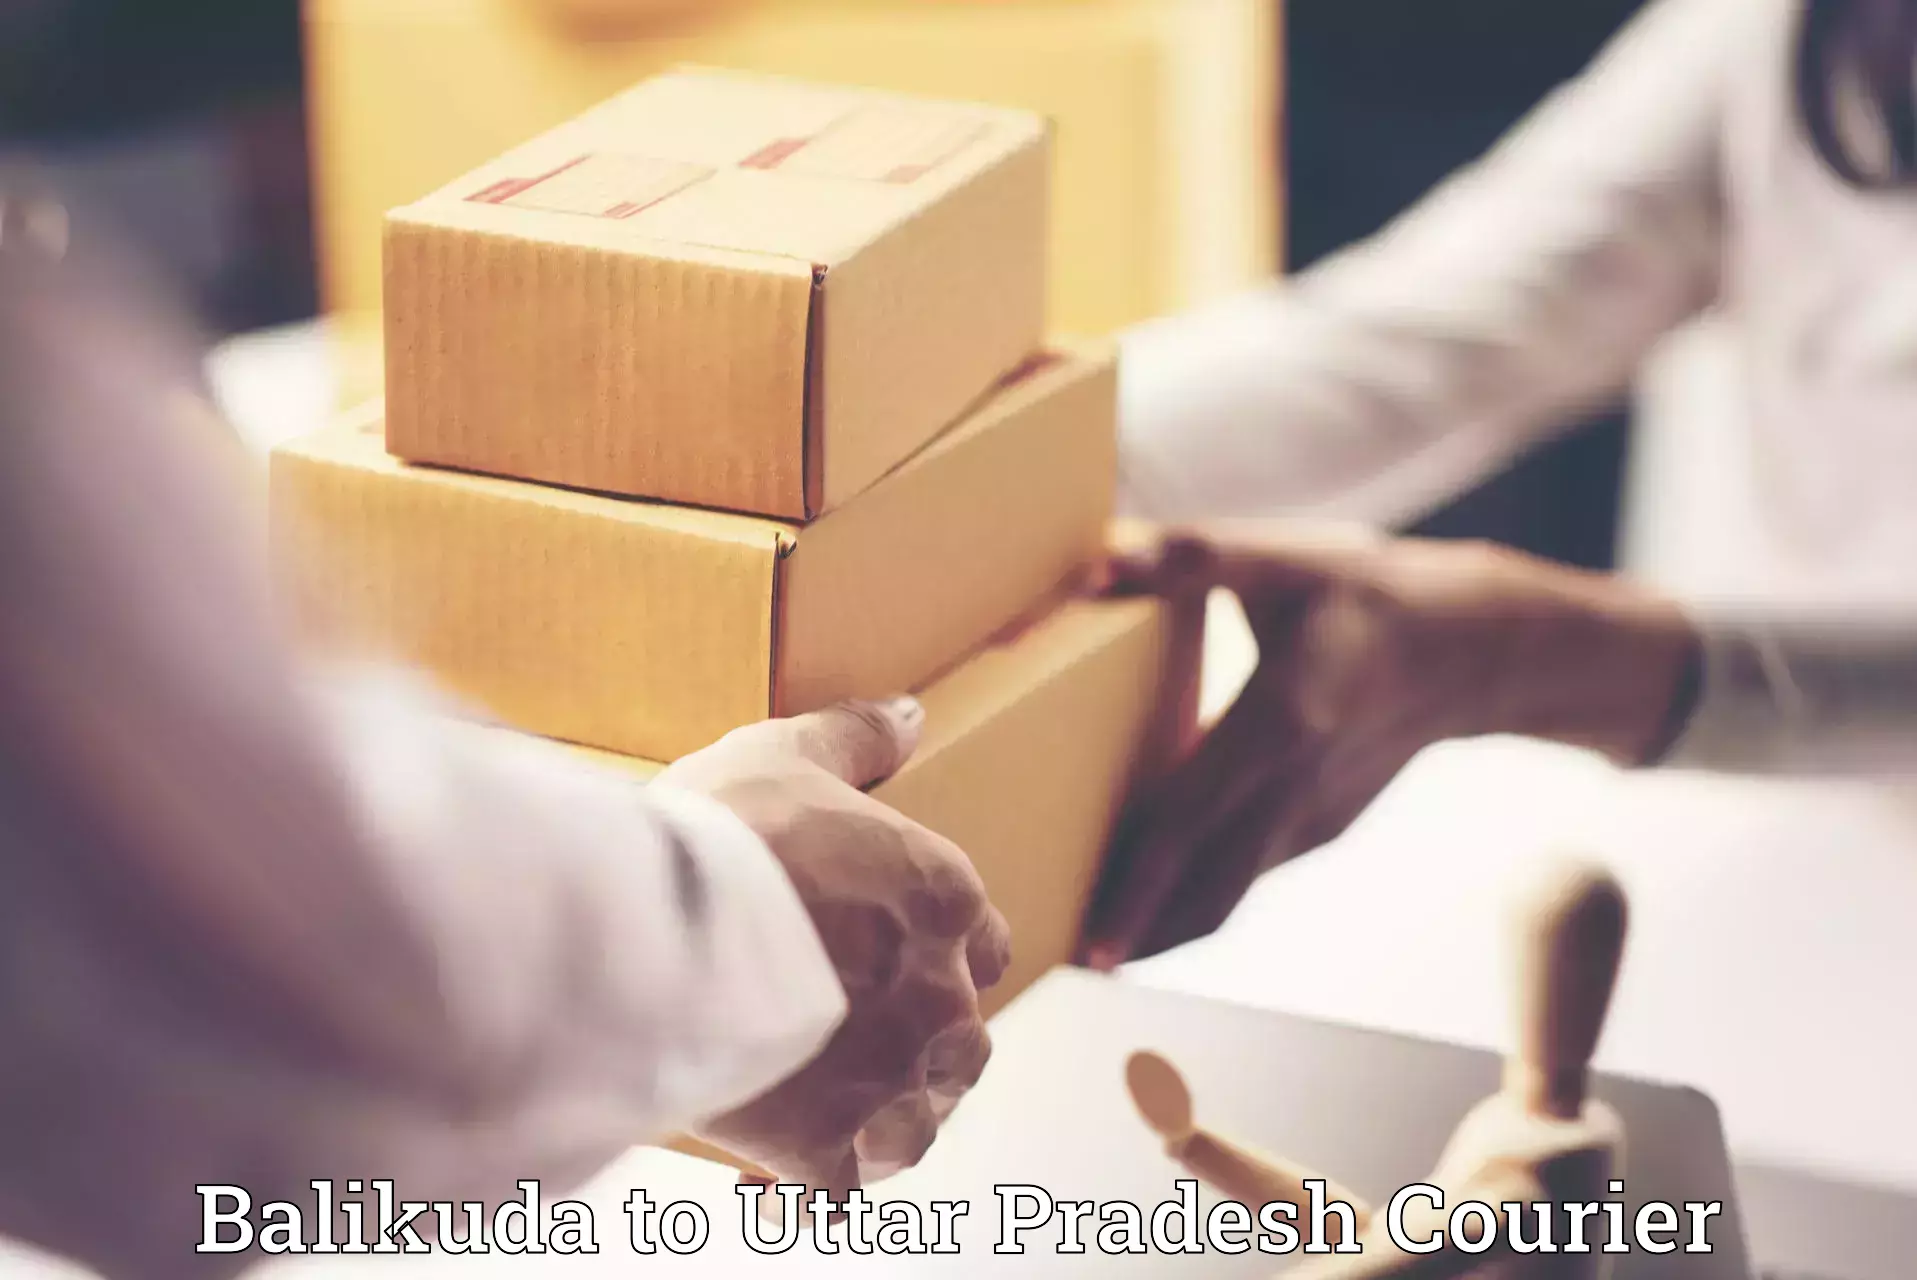 Professional moving company Balikuda to Uttar Pradesh